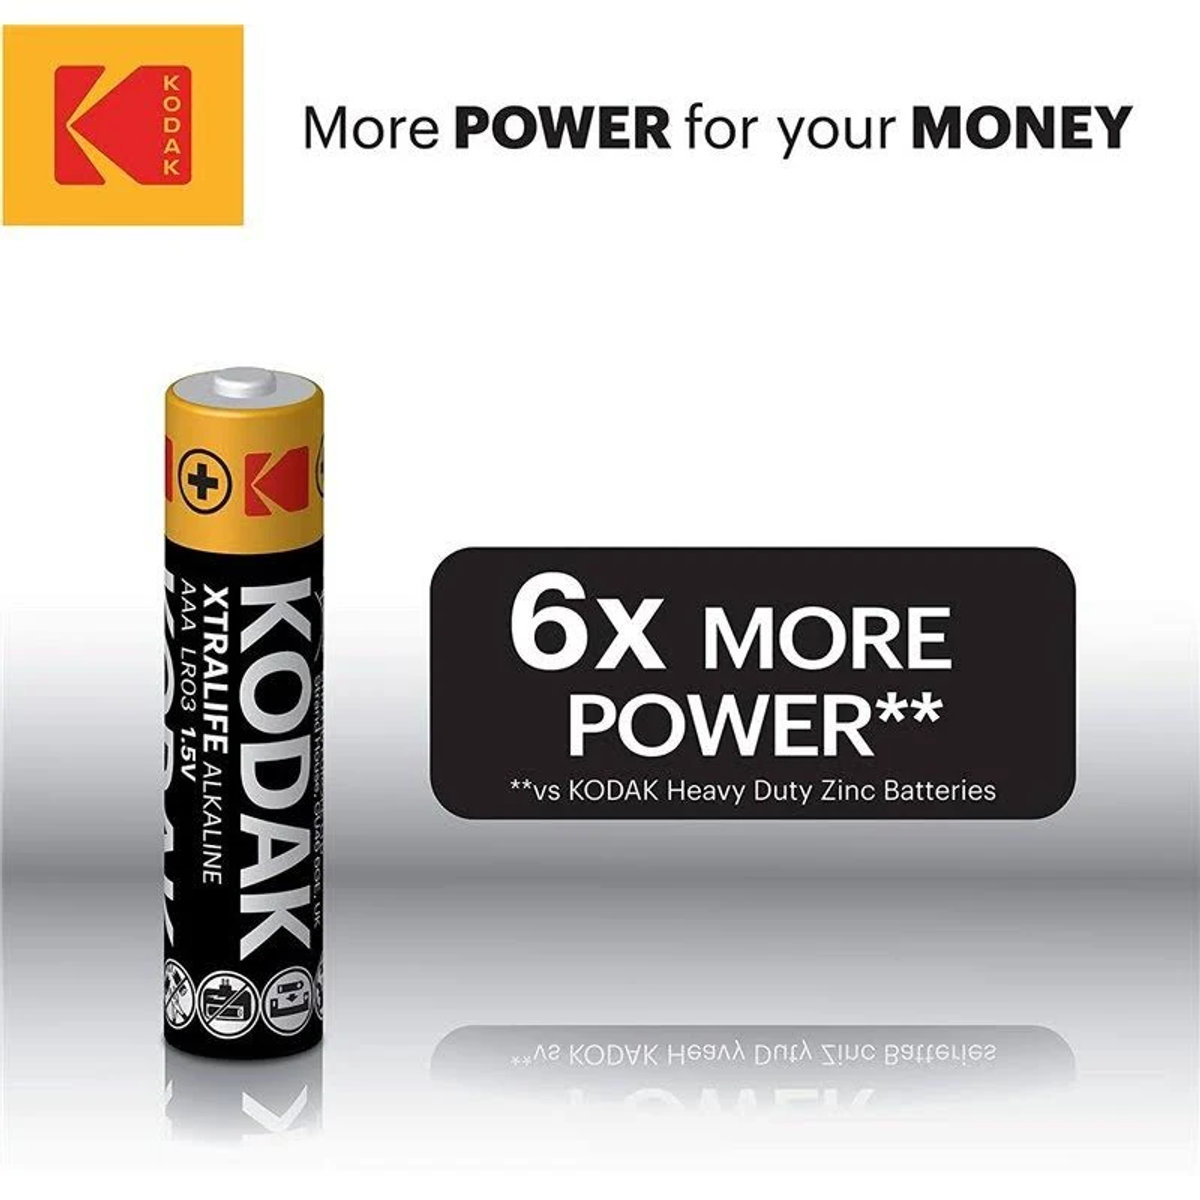 30422643 erforderlich Mehrzweckbatterien, (enthalten). 1.5 KODAK AAA 60 Batterien Volt